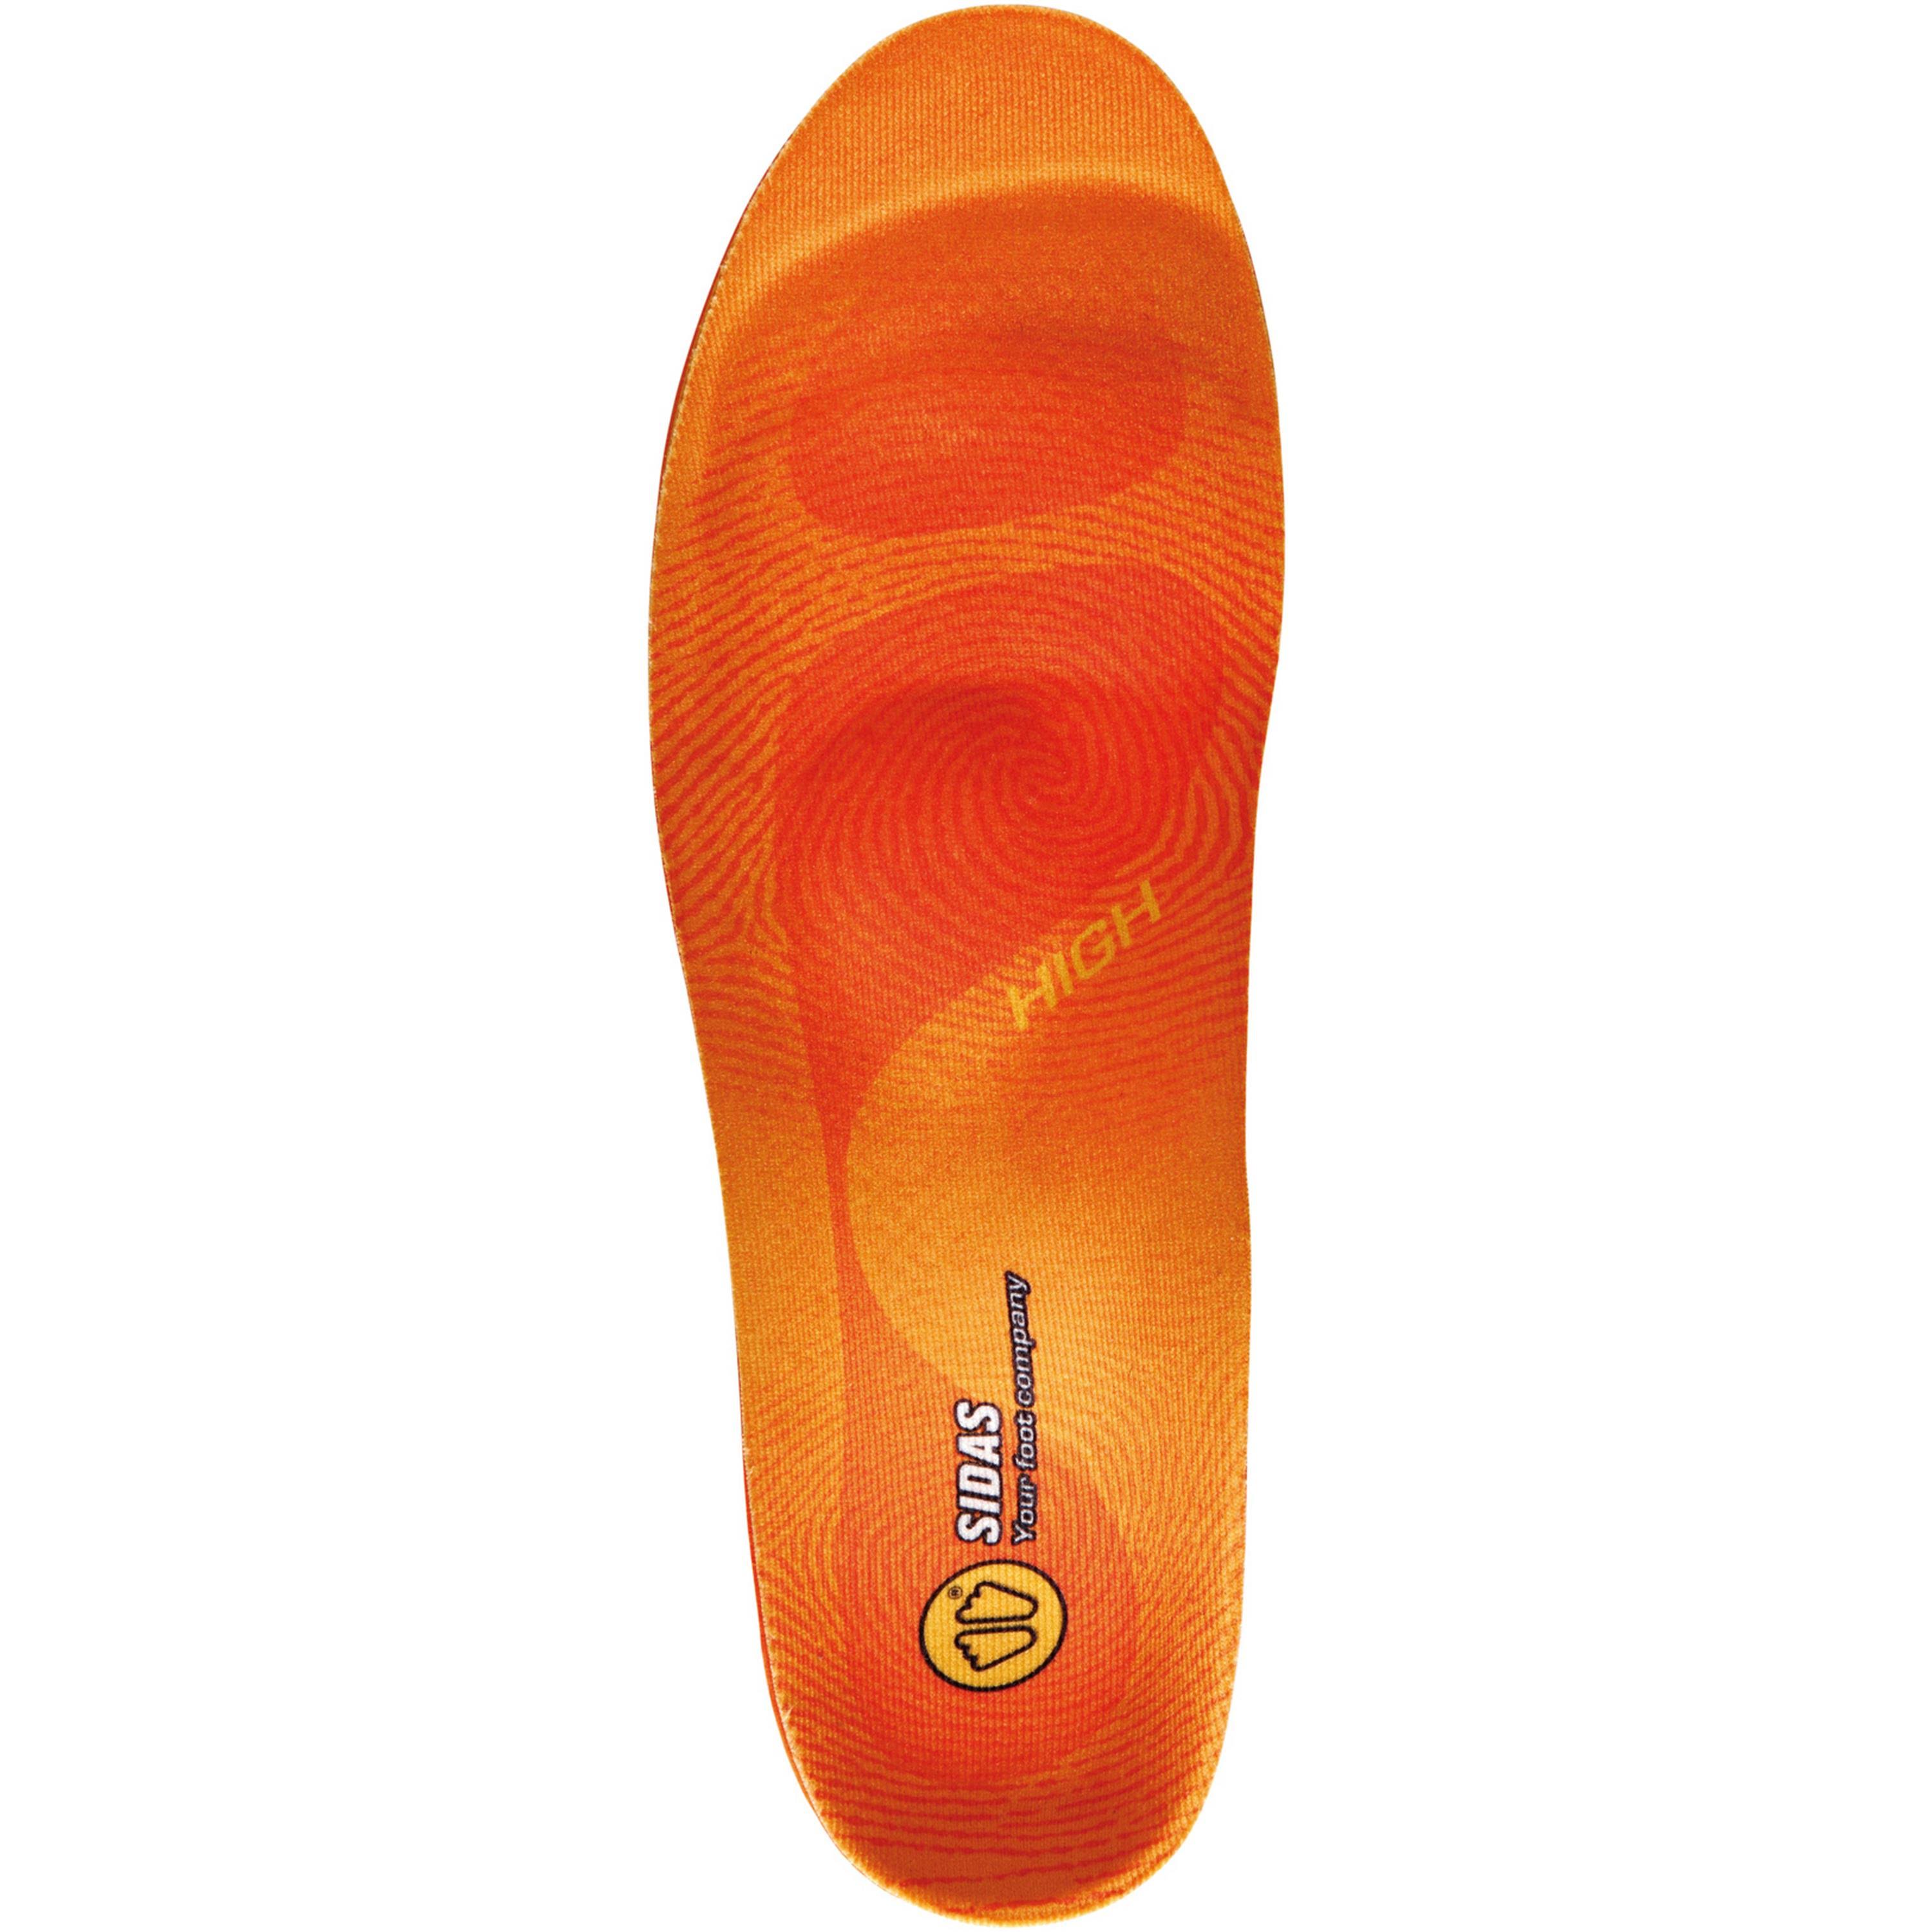 Sidas Winter 3 Feet High Ski/snowboard Boot Insoles - Orange, 2XLarge